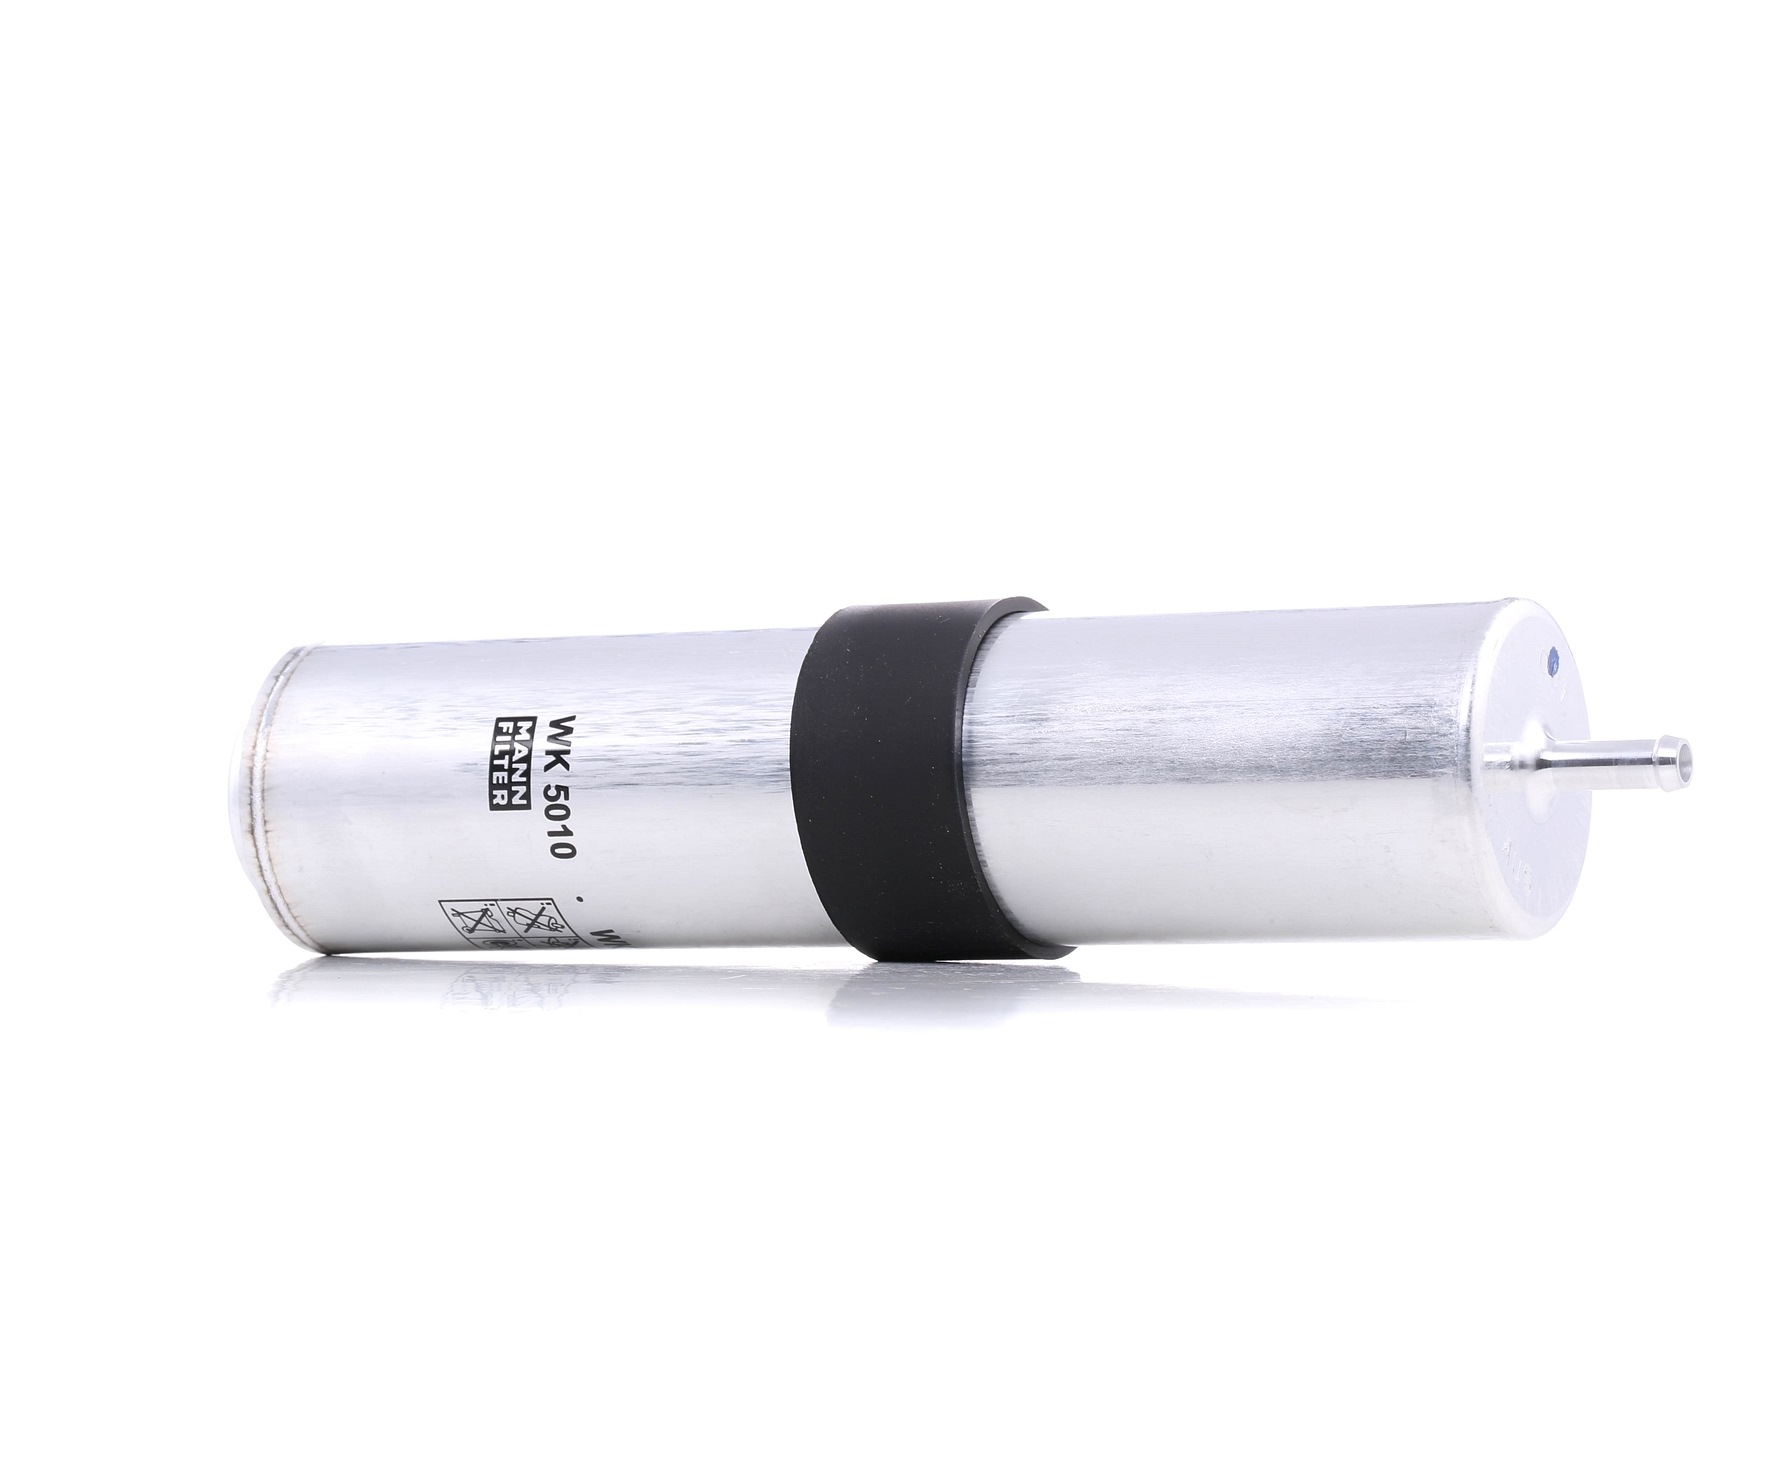 WK 5010 MANN-FILTER Fuel filters BMW In-Line Filter, 9, 8mm